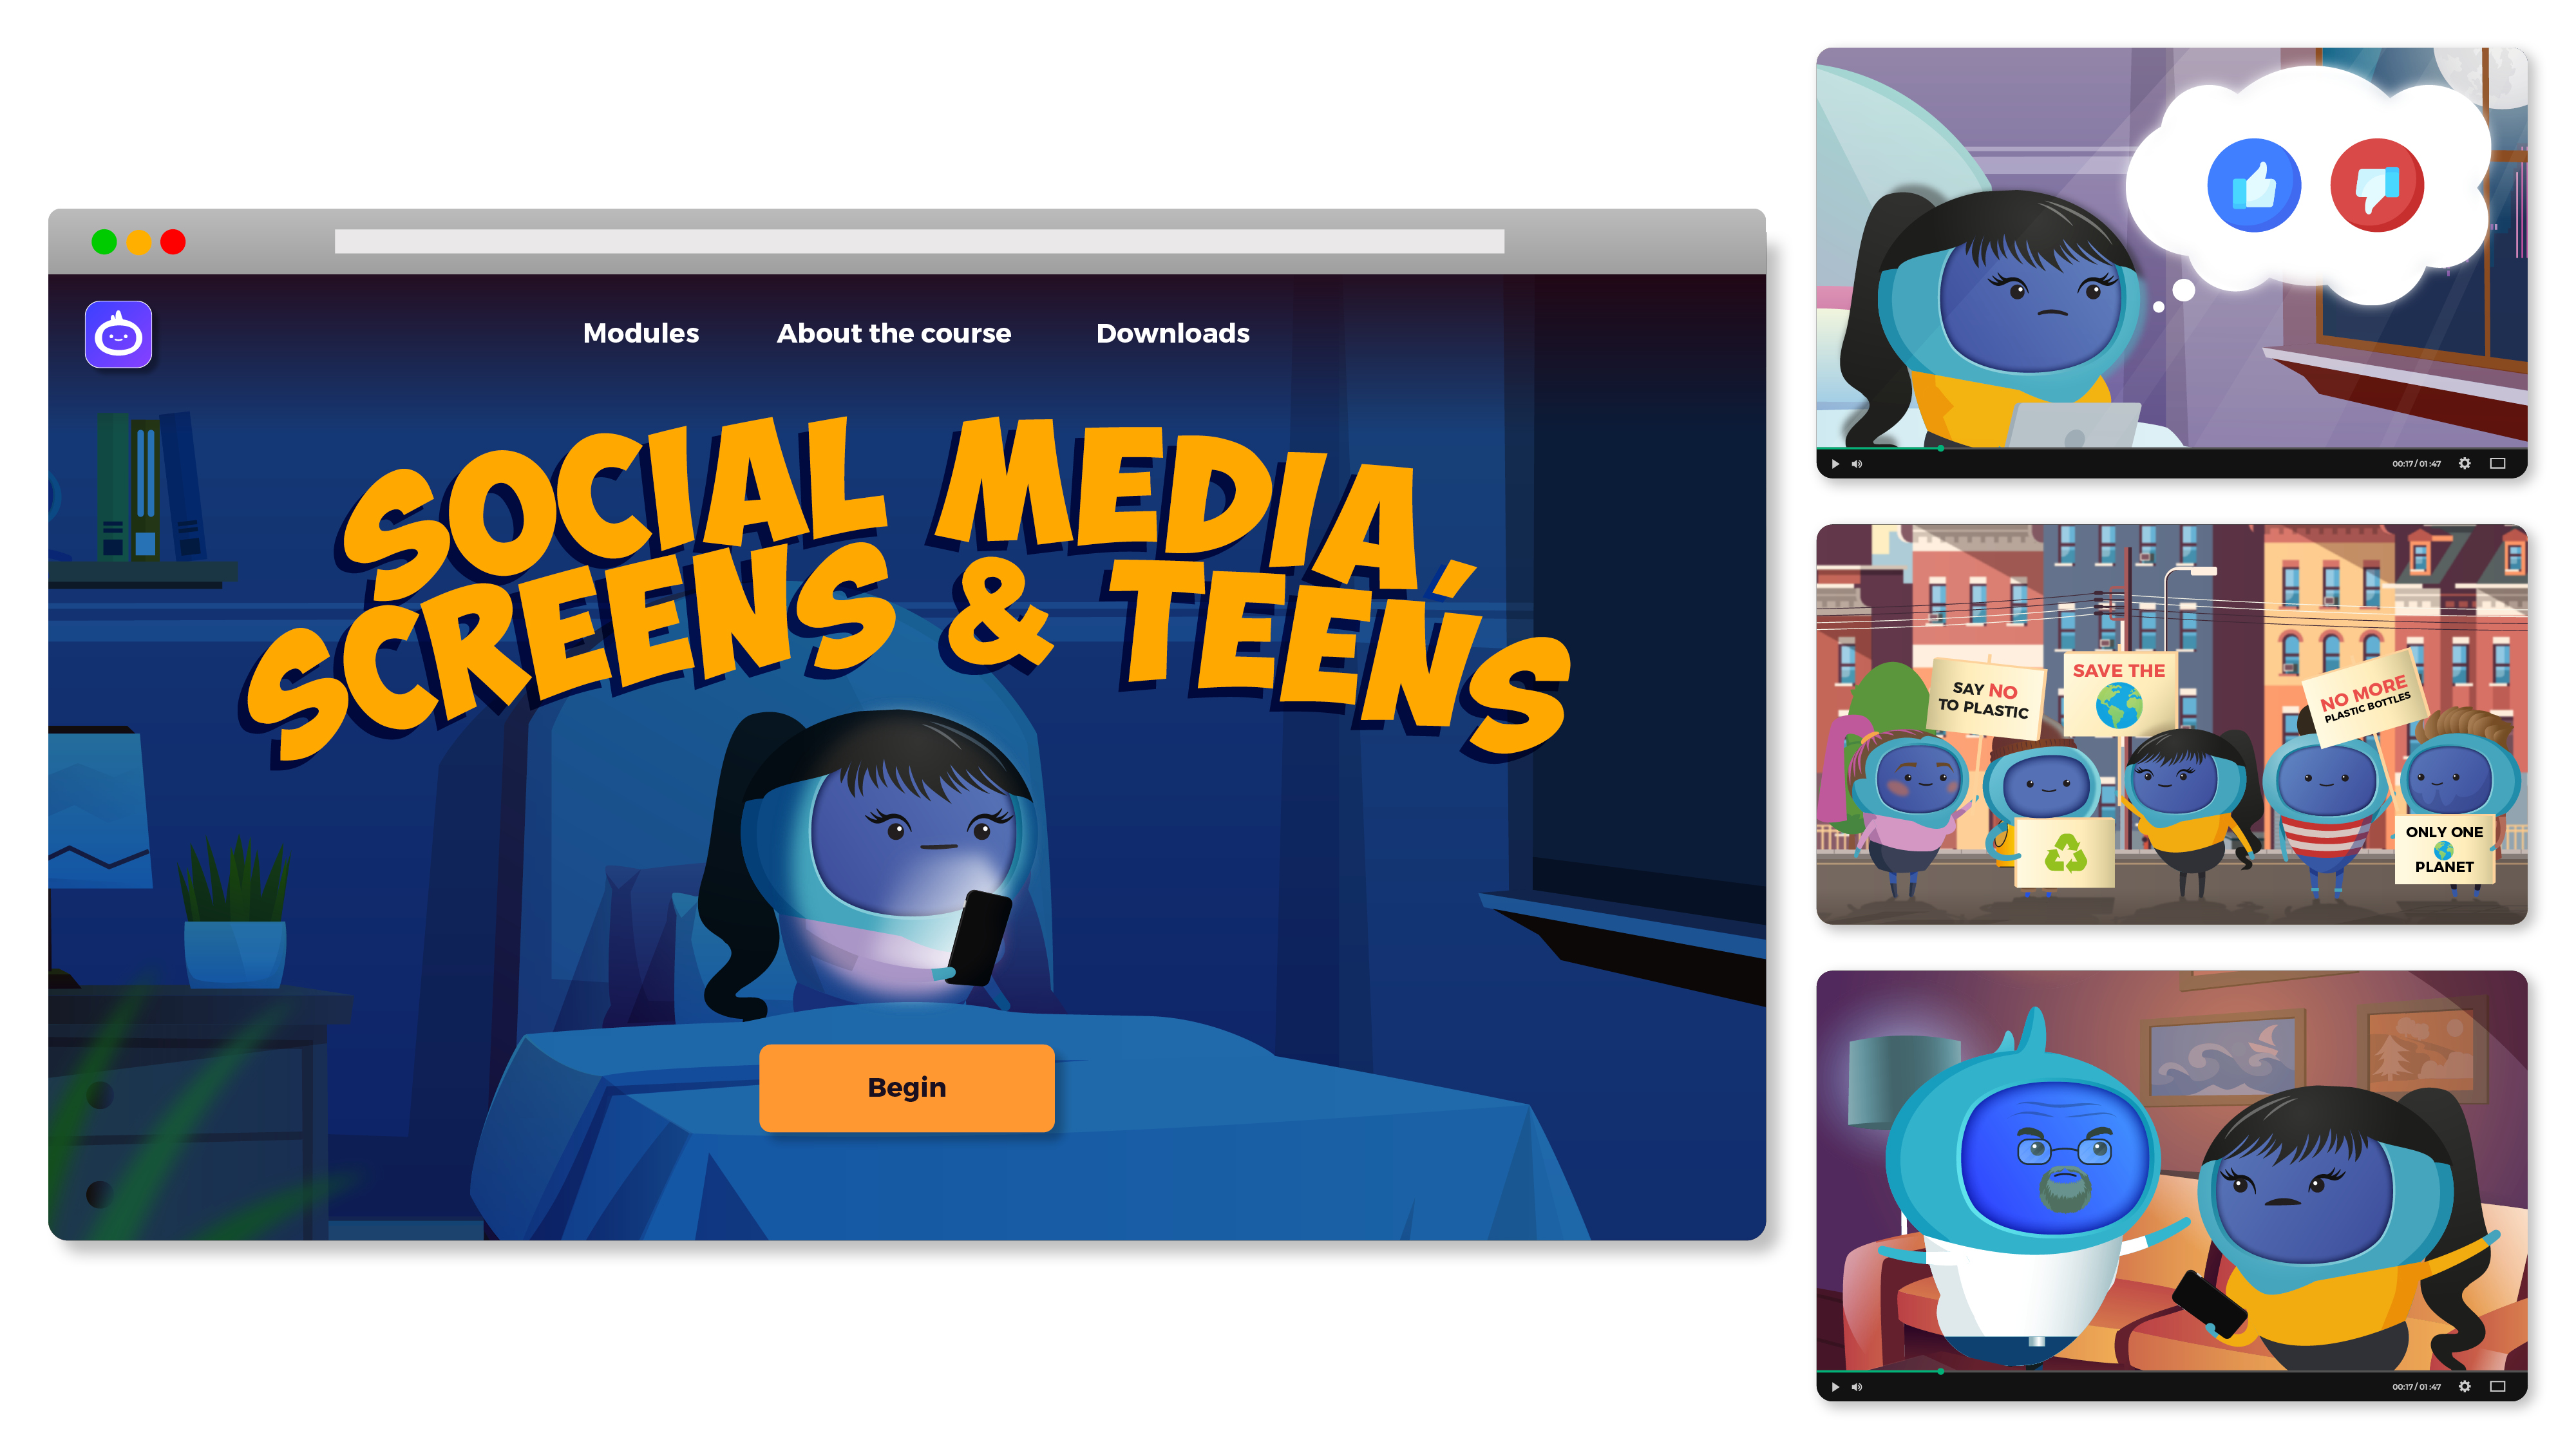 iAM Social Media Screens and Teens Landing Page Artwork Image